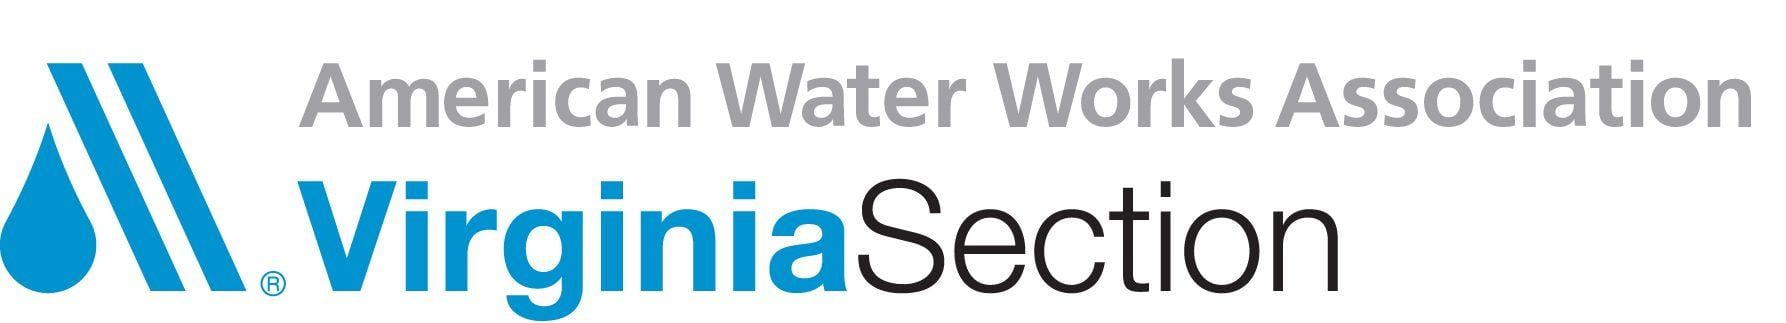 AWWA Logo - Event Planning Water Works Association